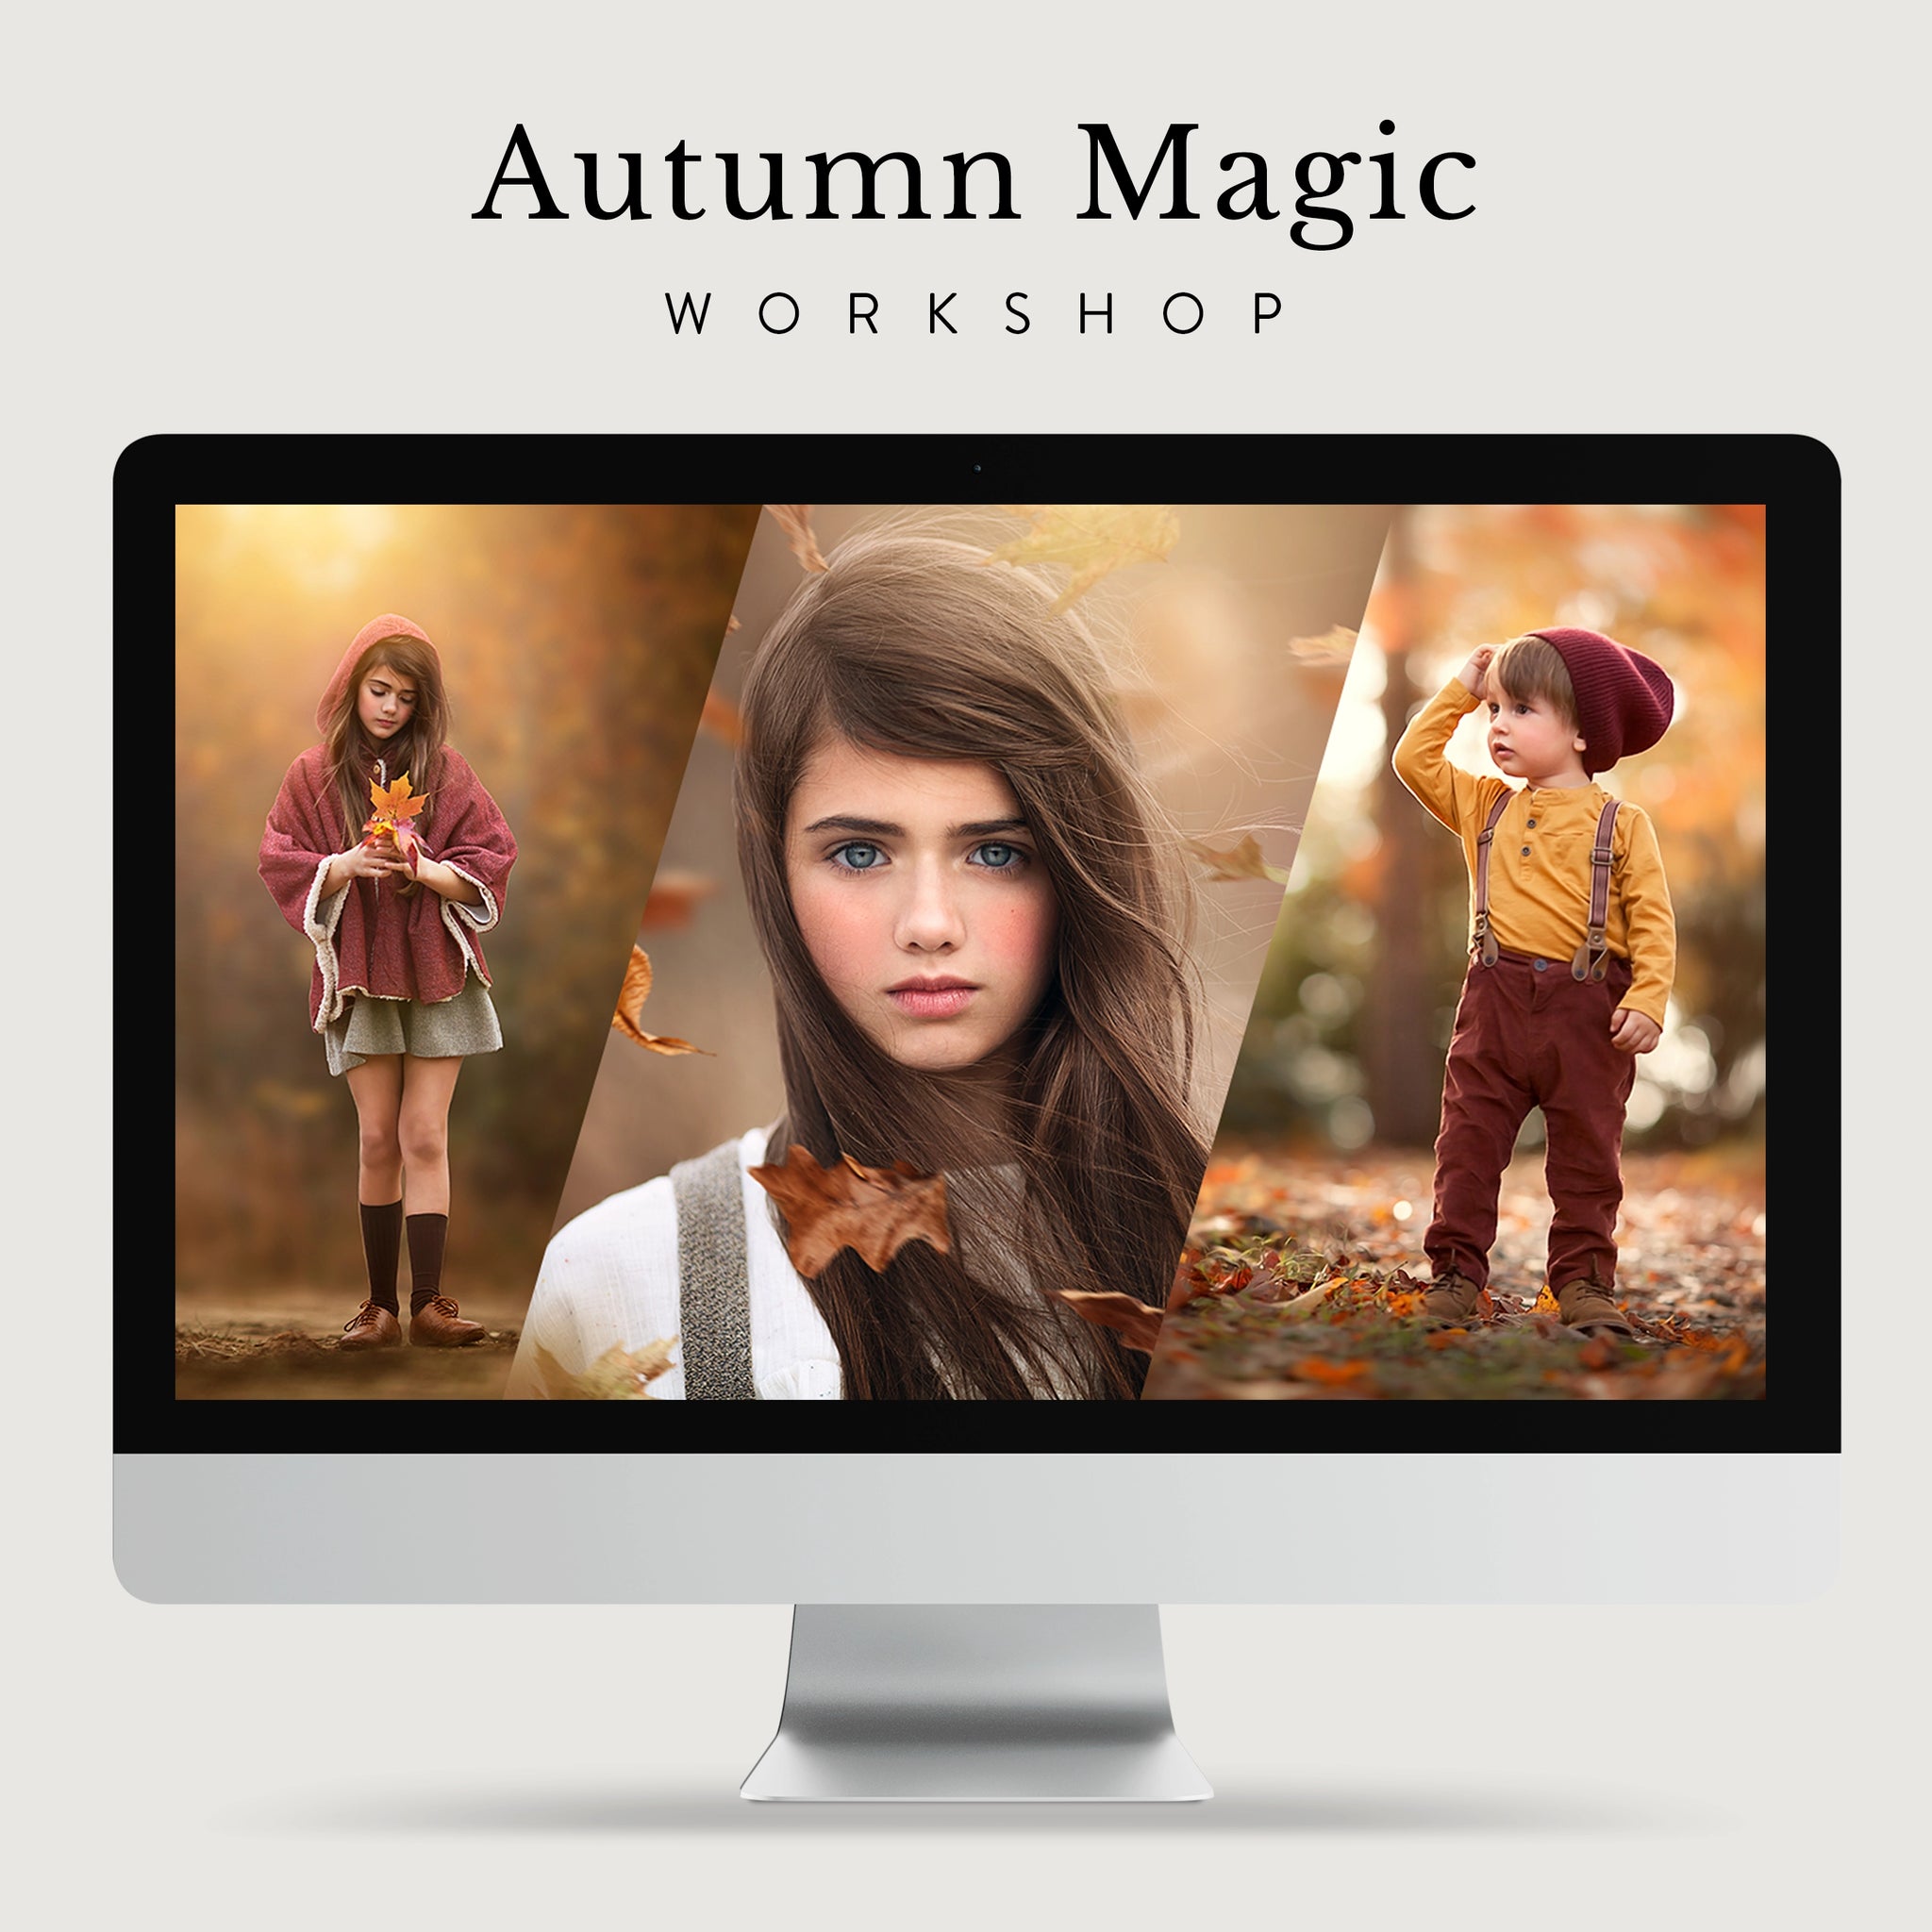 autumn photos editing course for photographers